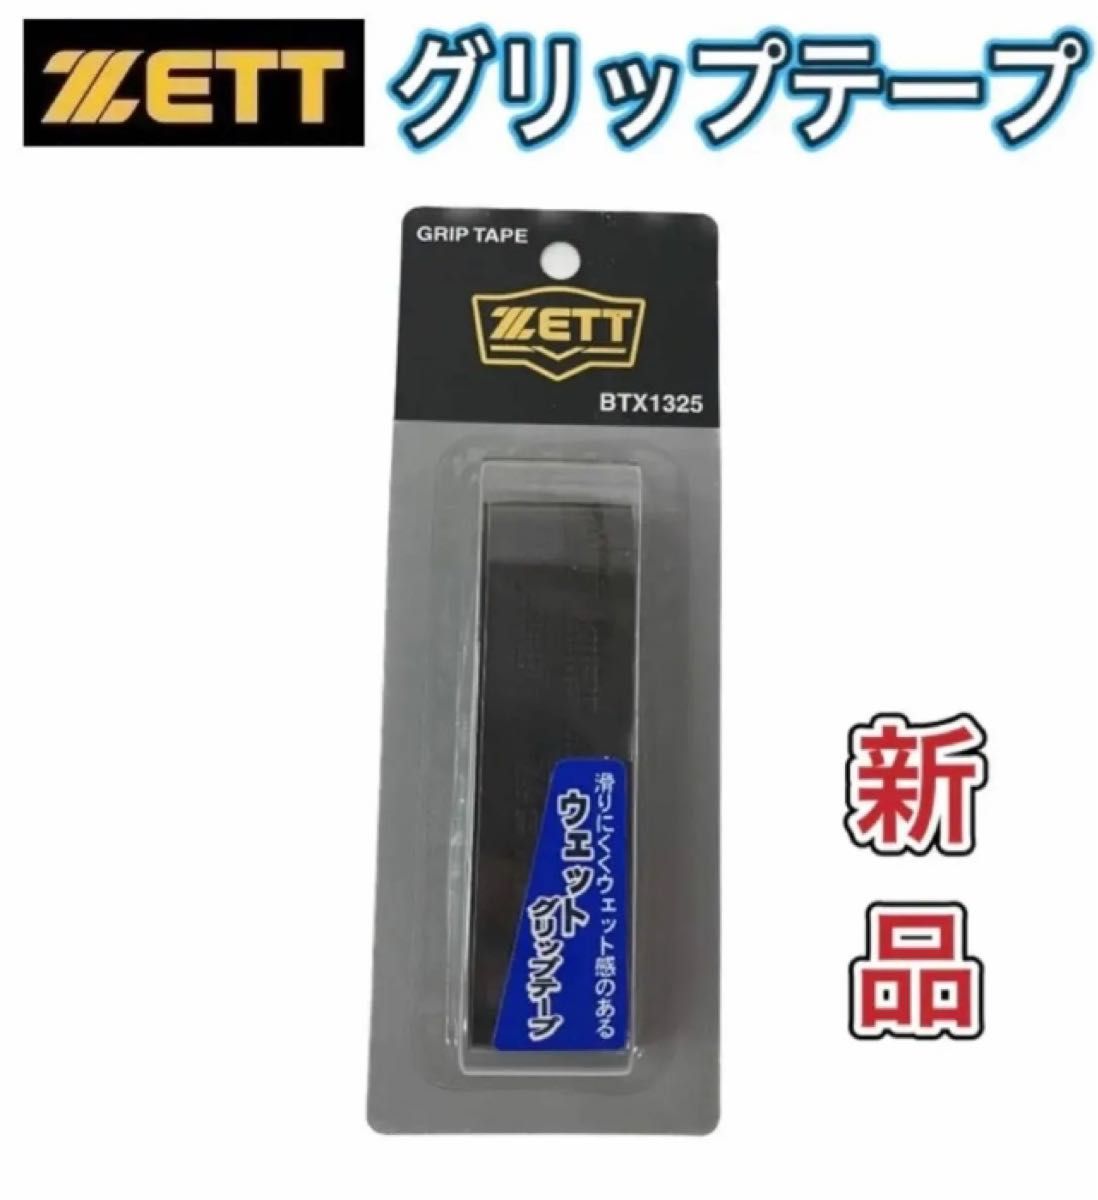 ZETT ゼット 野球 バット用グリップテープ ブラック